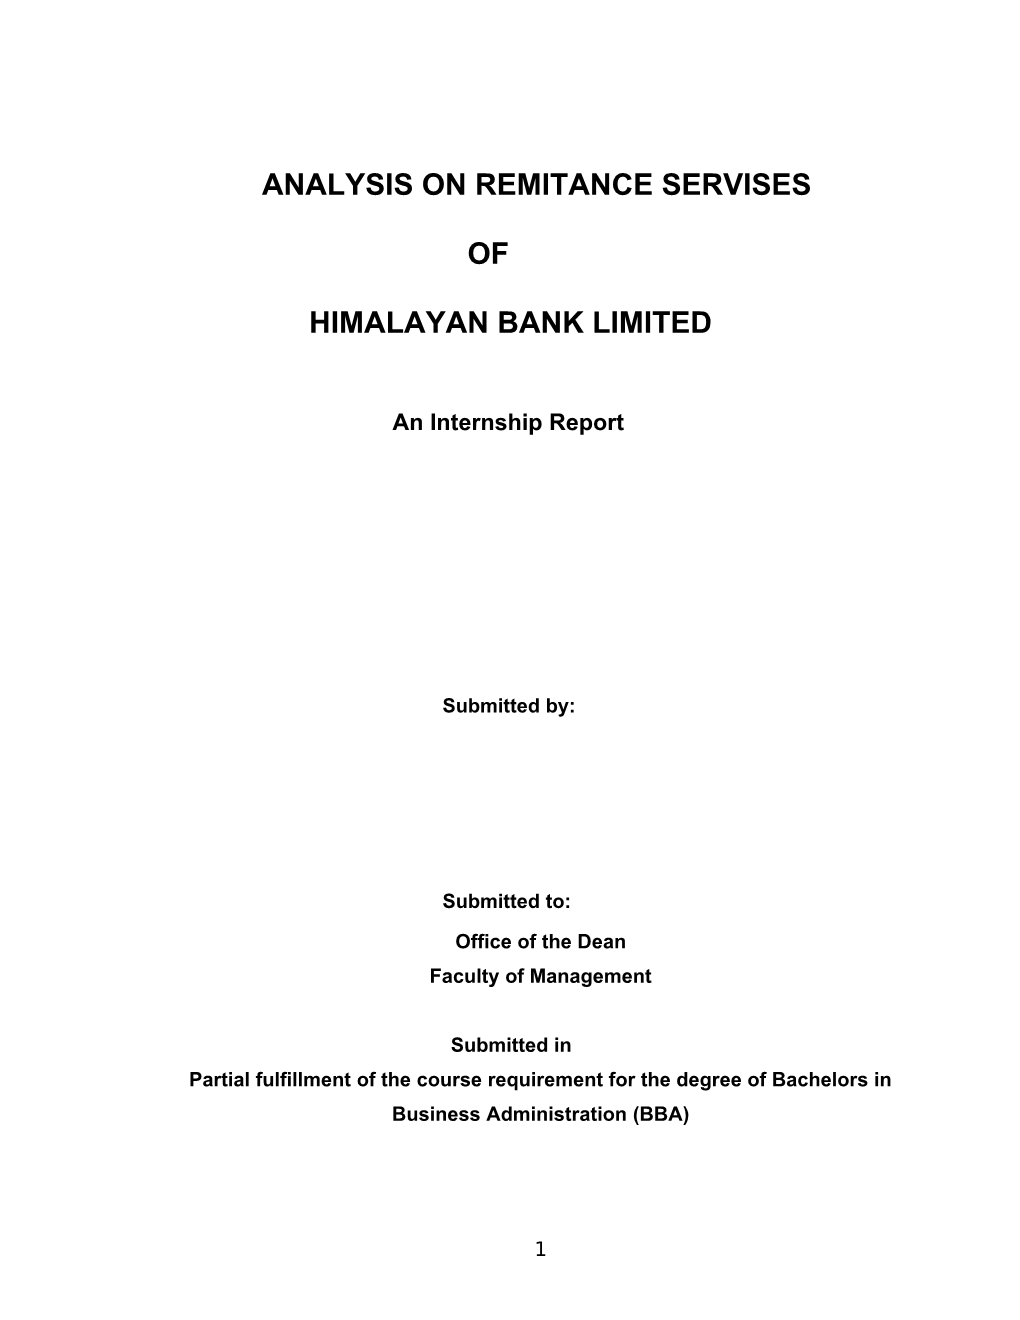 Analysis on Remitance Servises of Himalayan Bank Limited